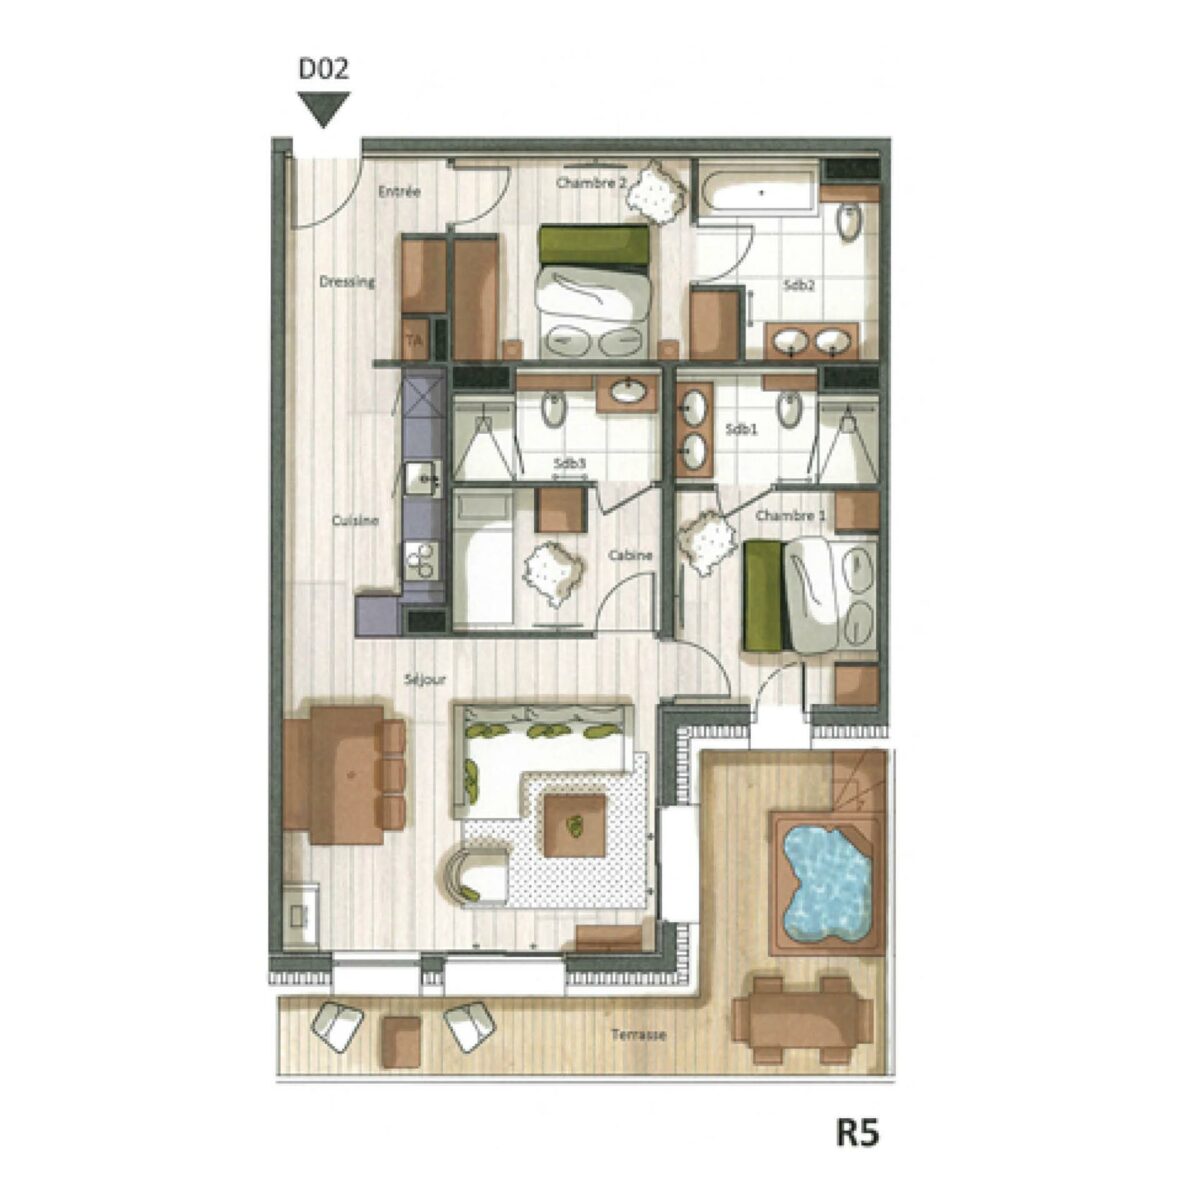 Falcon Lodge D02 Floor Plan